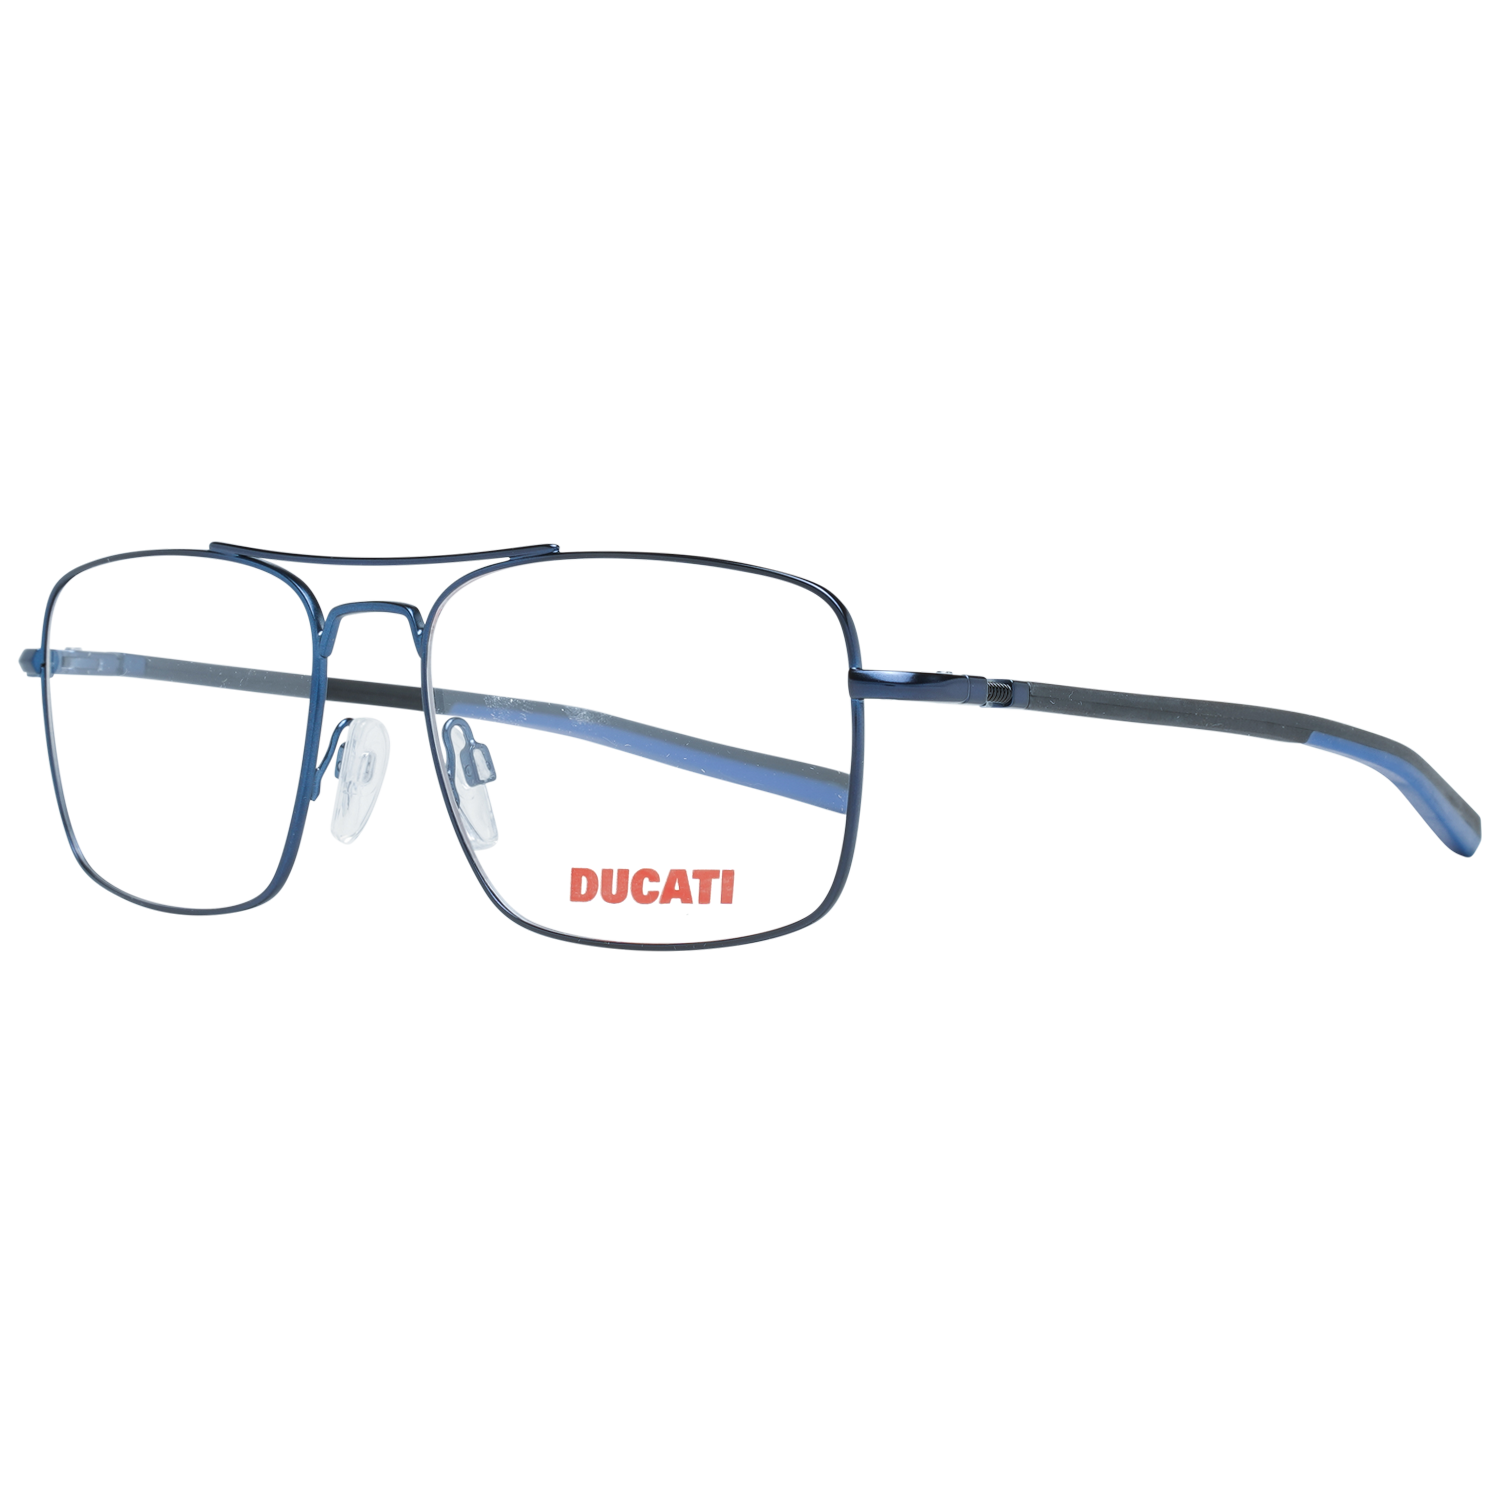 Ducati Frames Ducati Optical Frame DA3001 600 57 Eyeglasses Eyewear UK USA Australia 